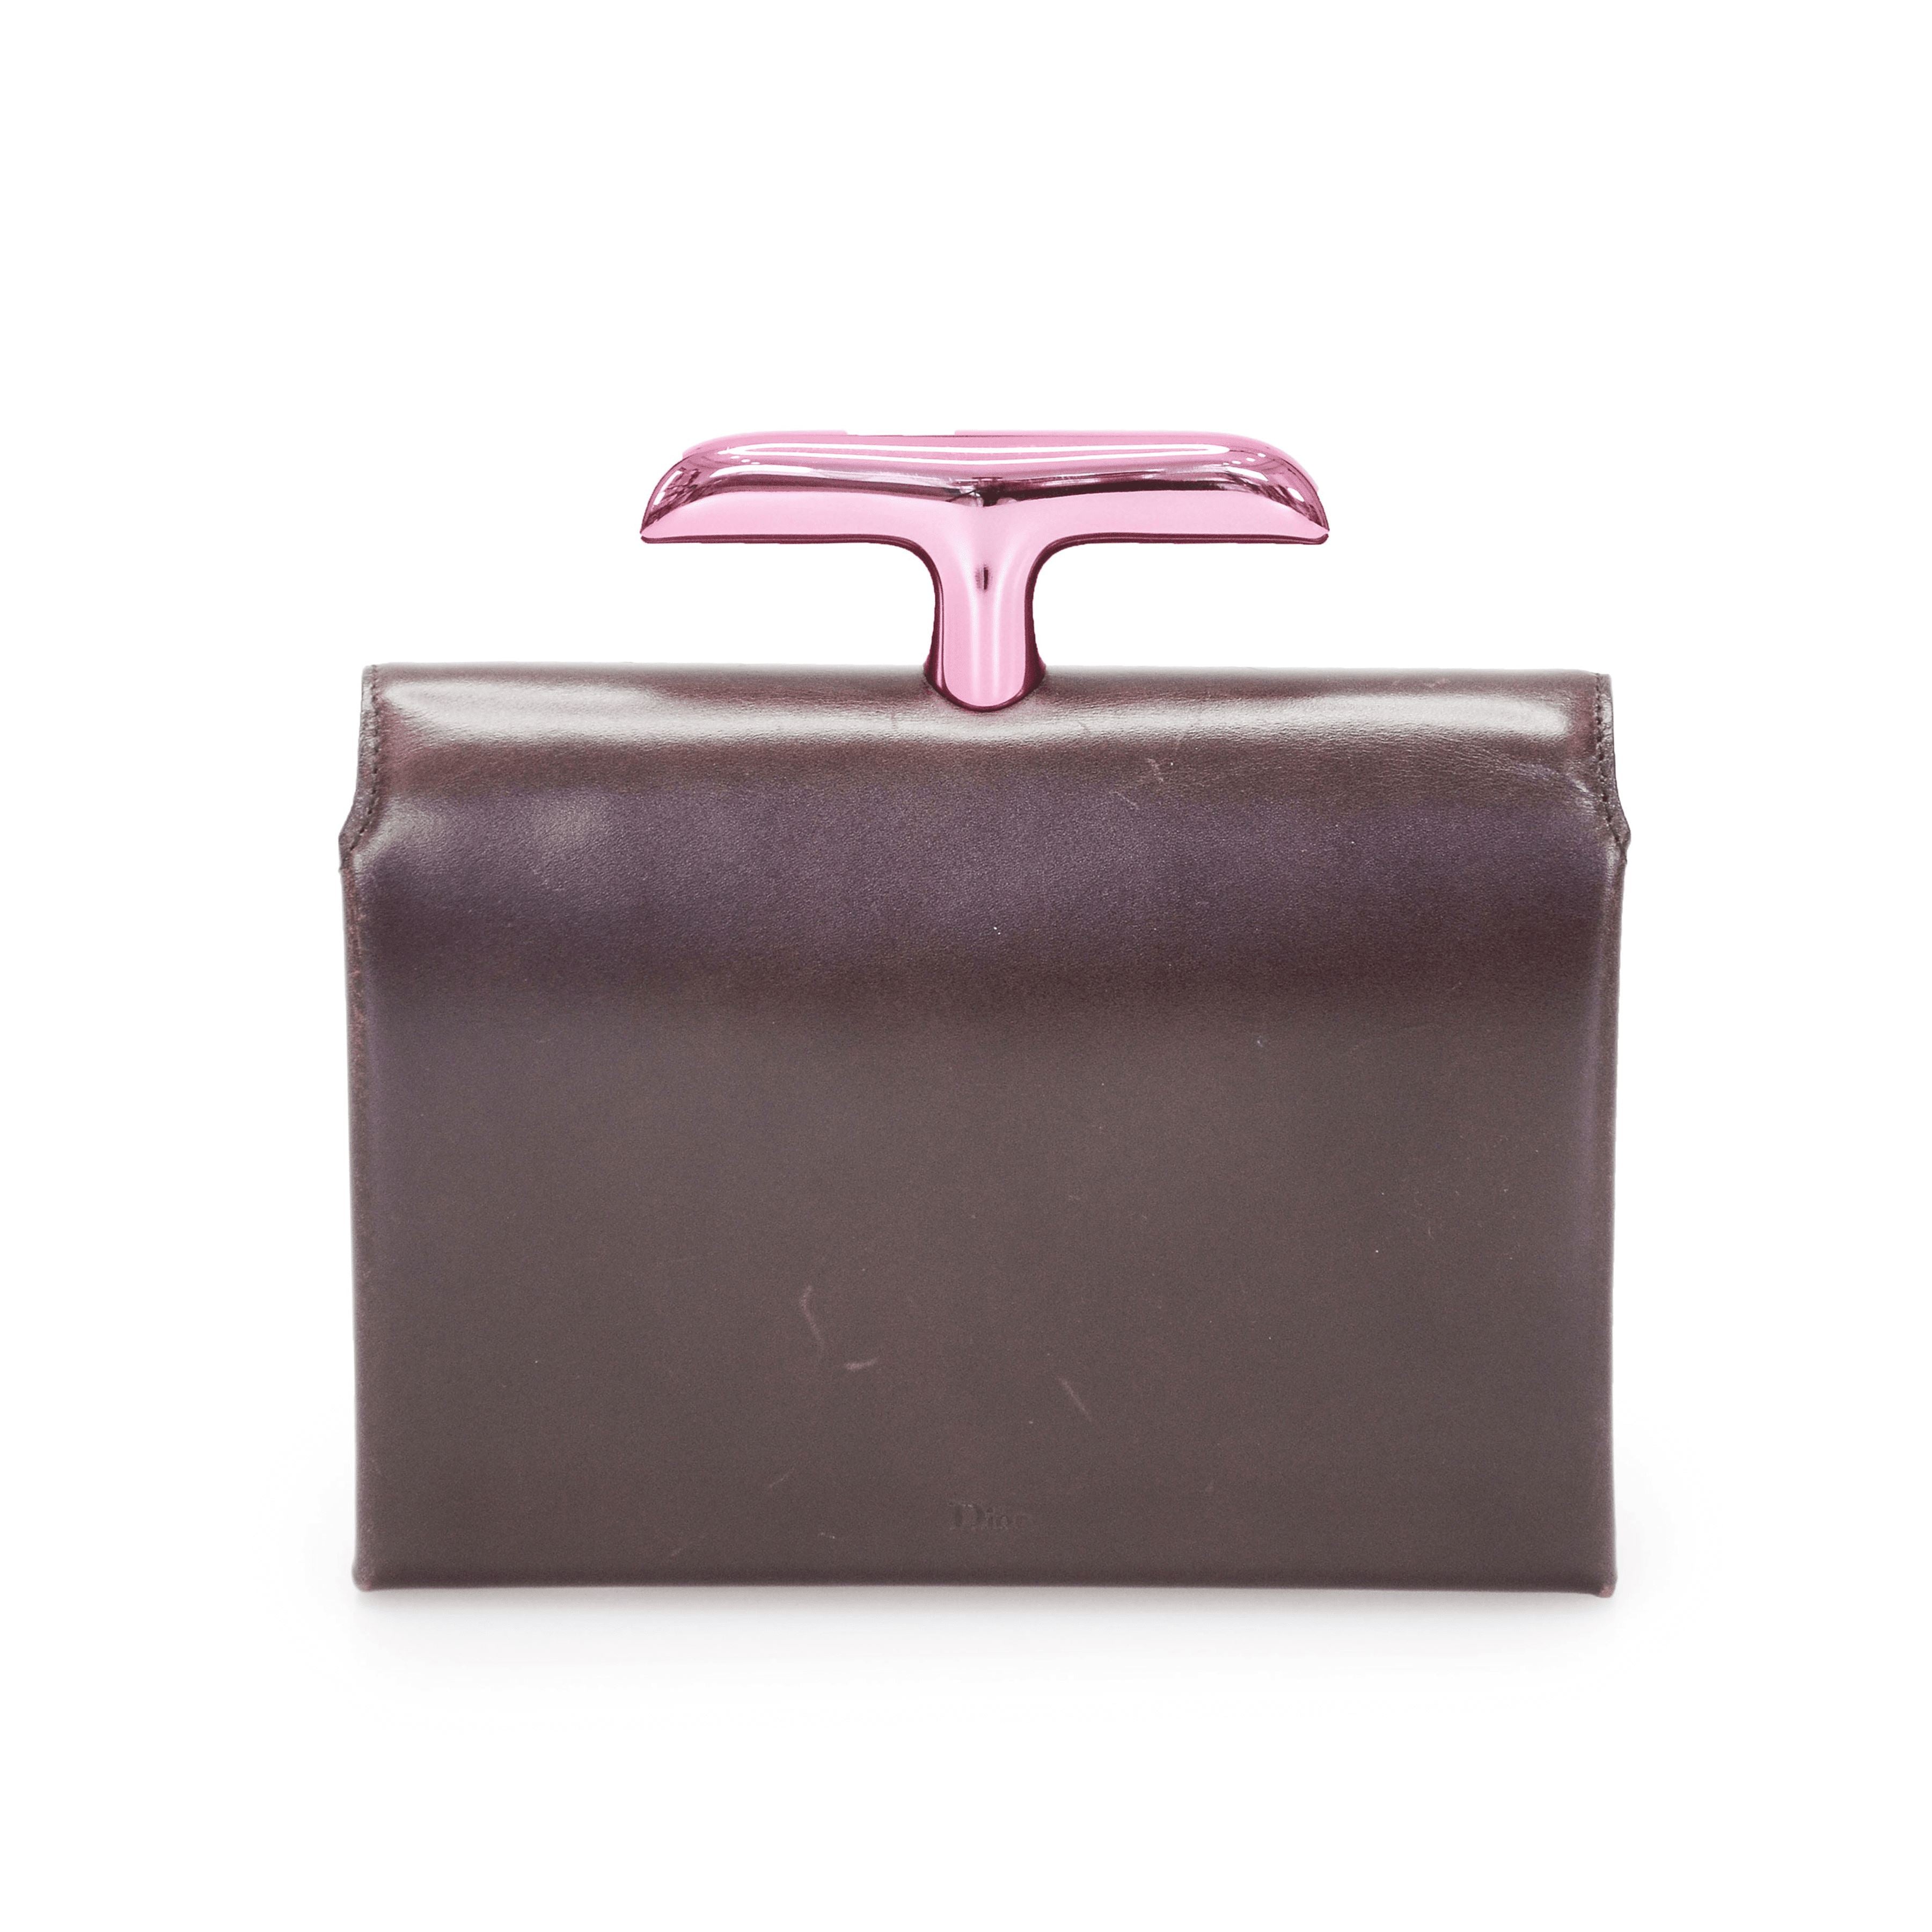 Dior Dark Chocolate Leather Small Handbag Bag Christian Dior 